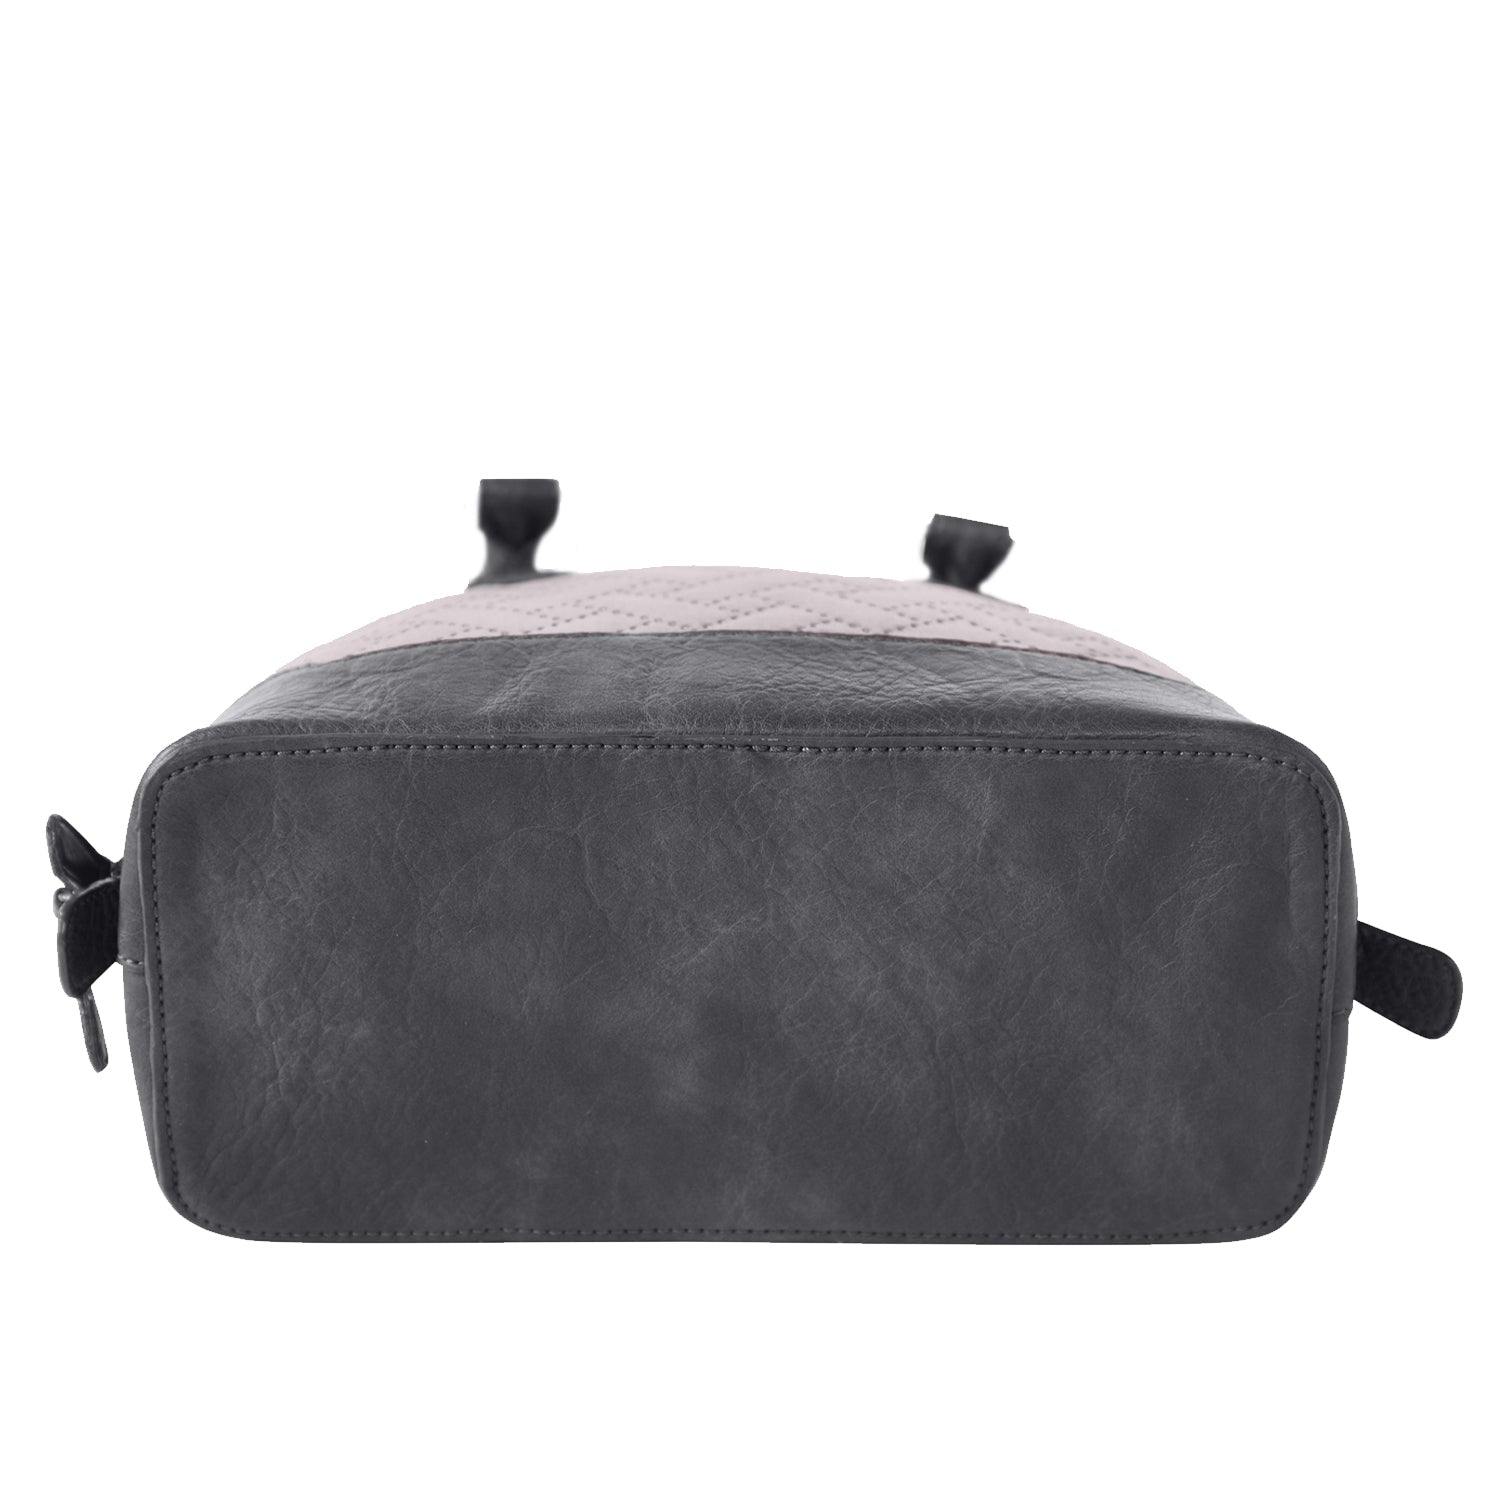 Mona B Small Handbag, Shoulder Bags For Shopping Travel With Stylish Design For Women: STL - QRP-301 STL - Handbag by Mona-B - Backpack, Flash Sale, Flat50, New Arrivals, Sale, Shop1999, Shop2999, Shop3999